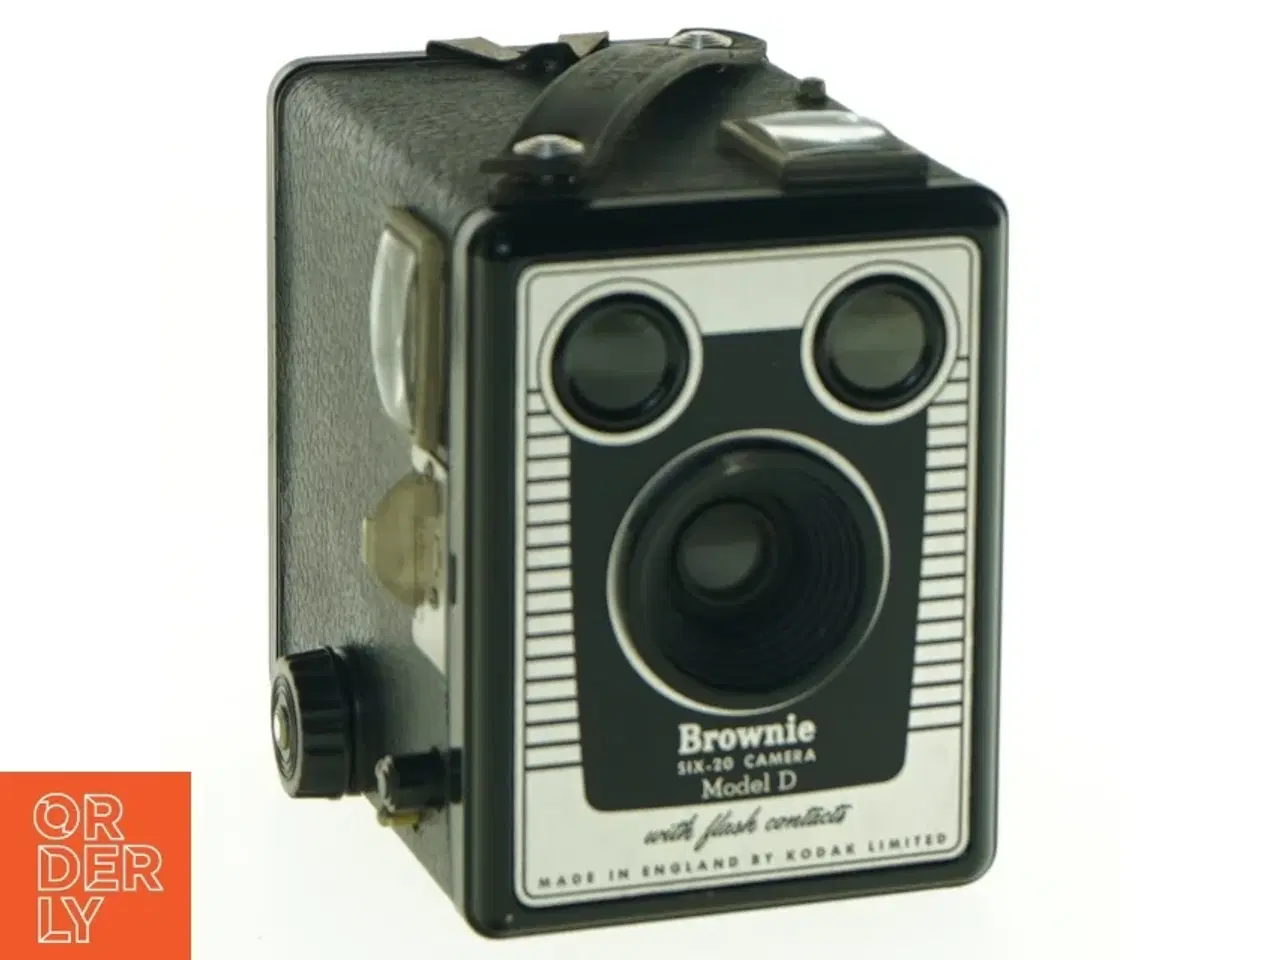 Billede 1 - Vintage Kodak Brownie Six-20 Model D Kamera fra Kodak (str. 14 x 8 cm)